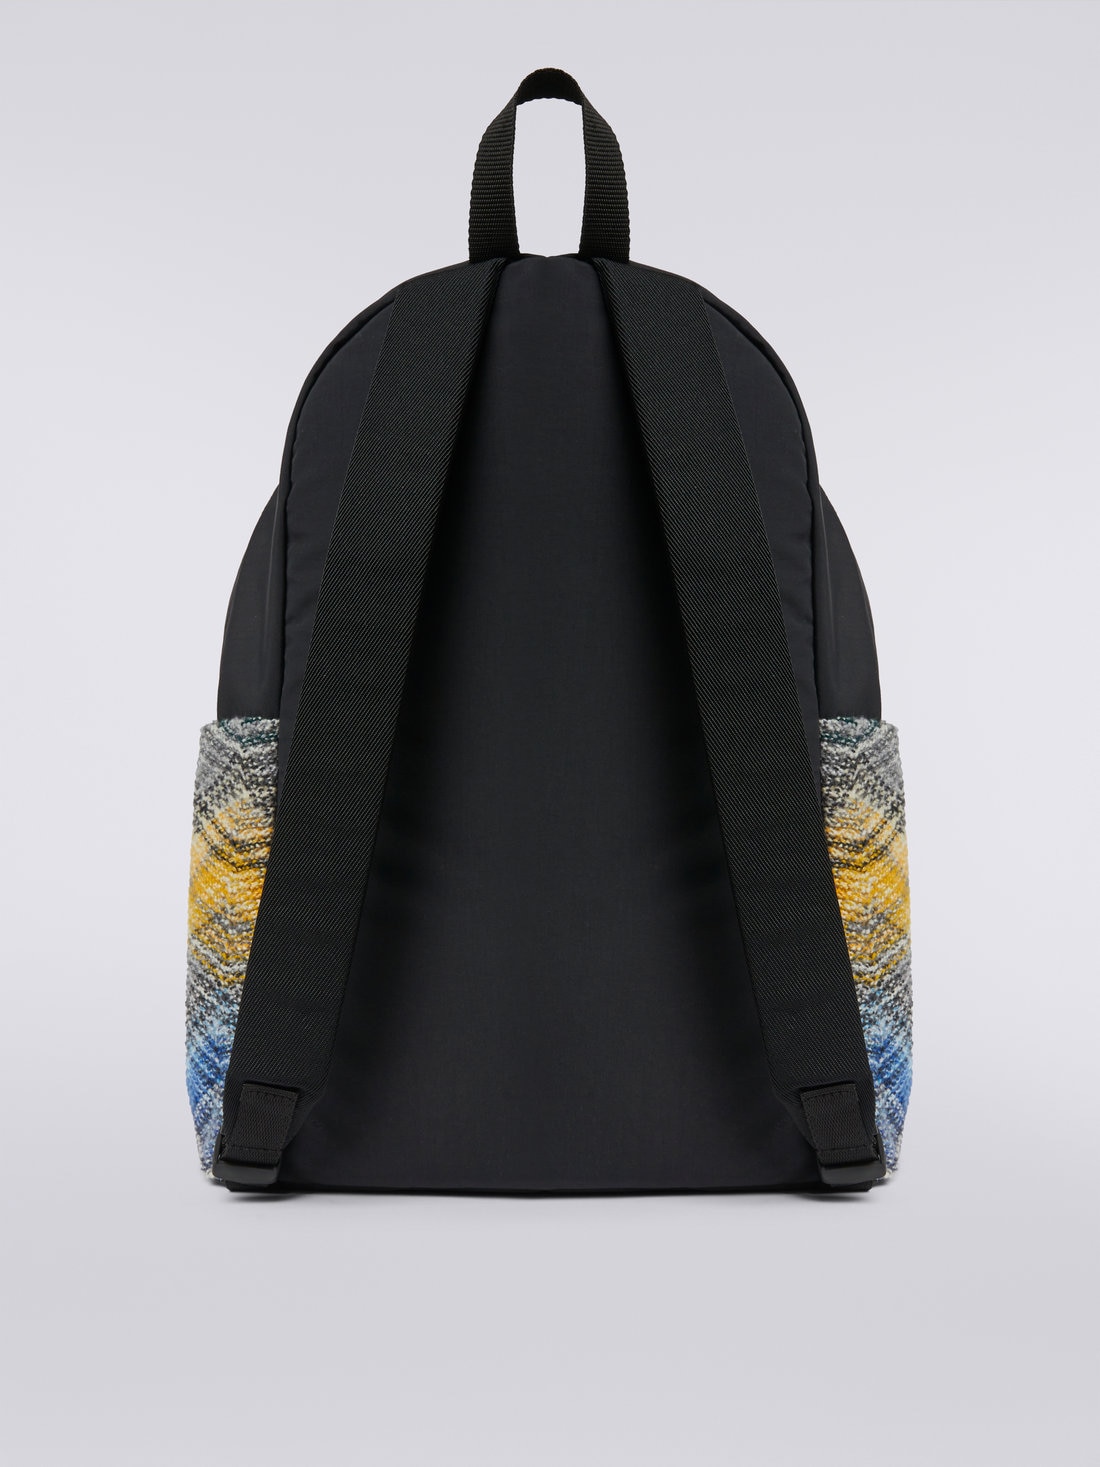 Zigzag wool rucksack, Multicoloured  - 8051575817274 - 2